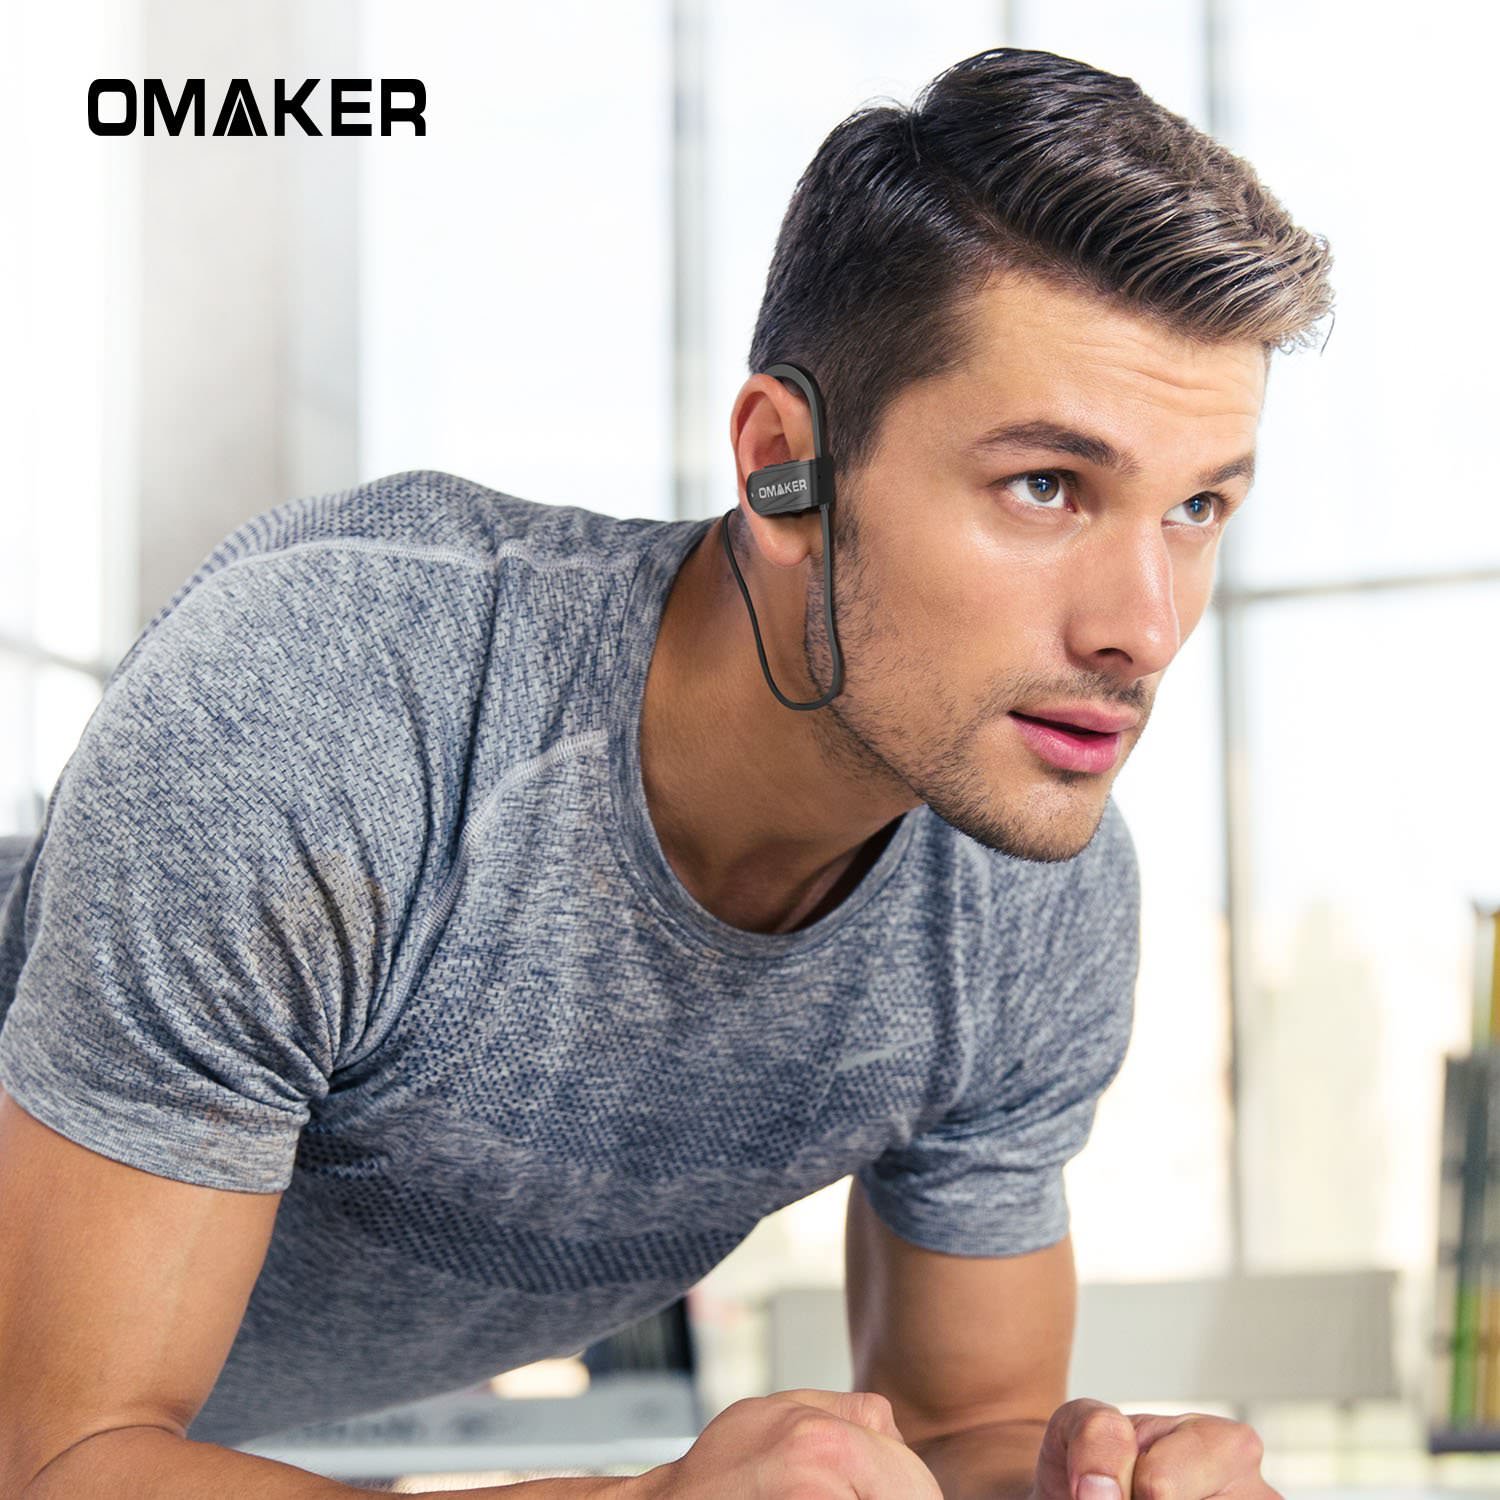 omaker-wirelessheadphone2